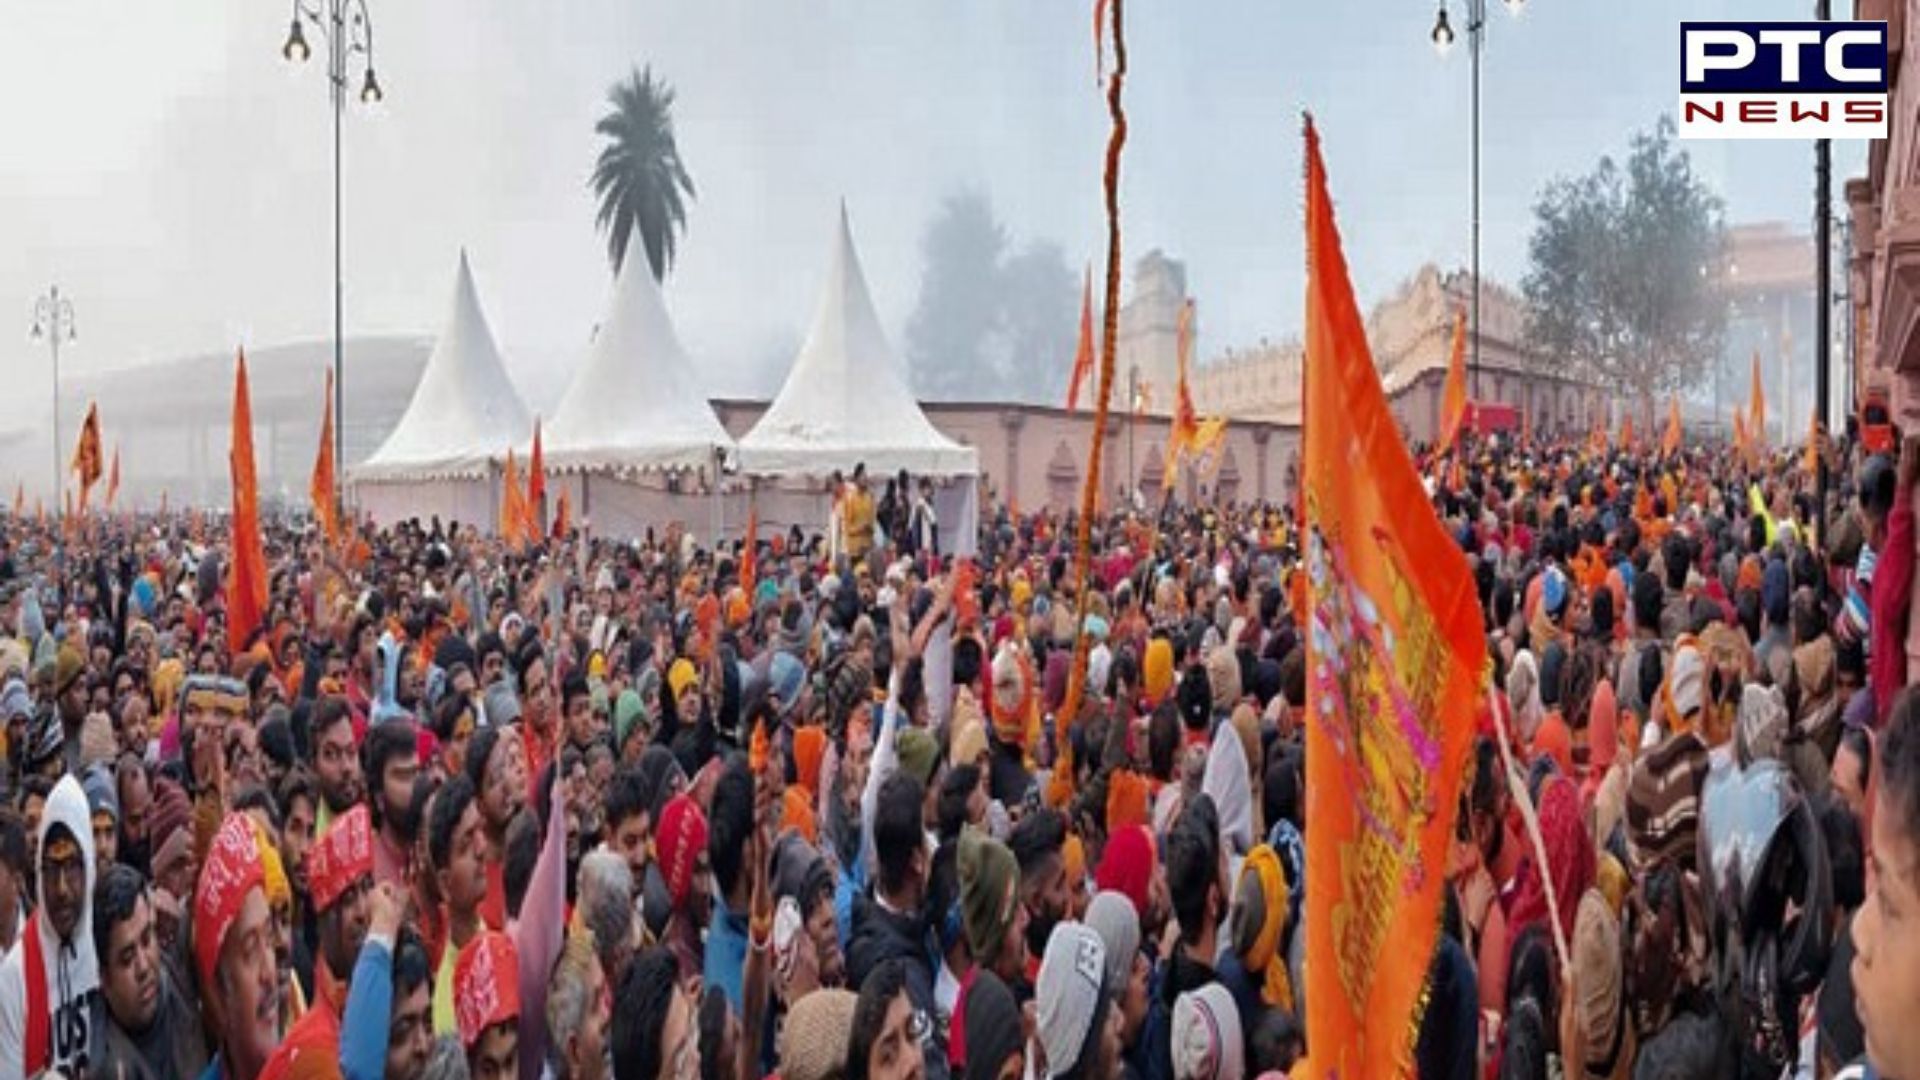 Ram Mandir Darshan: 2.5 lakh to 3 lakh devotees offer prayers at Ayodhya’s Ram Mandir